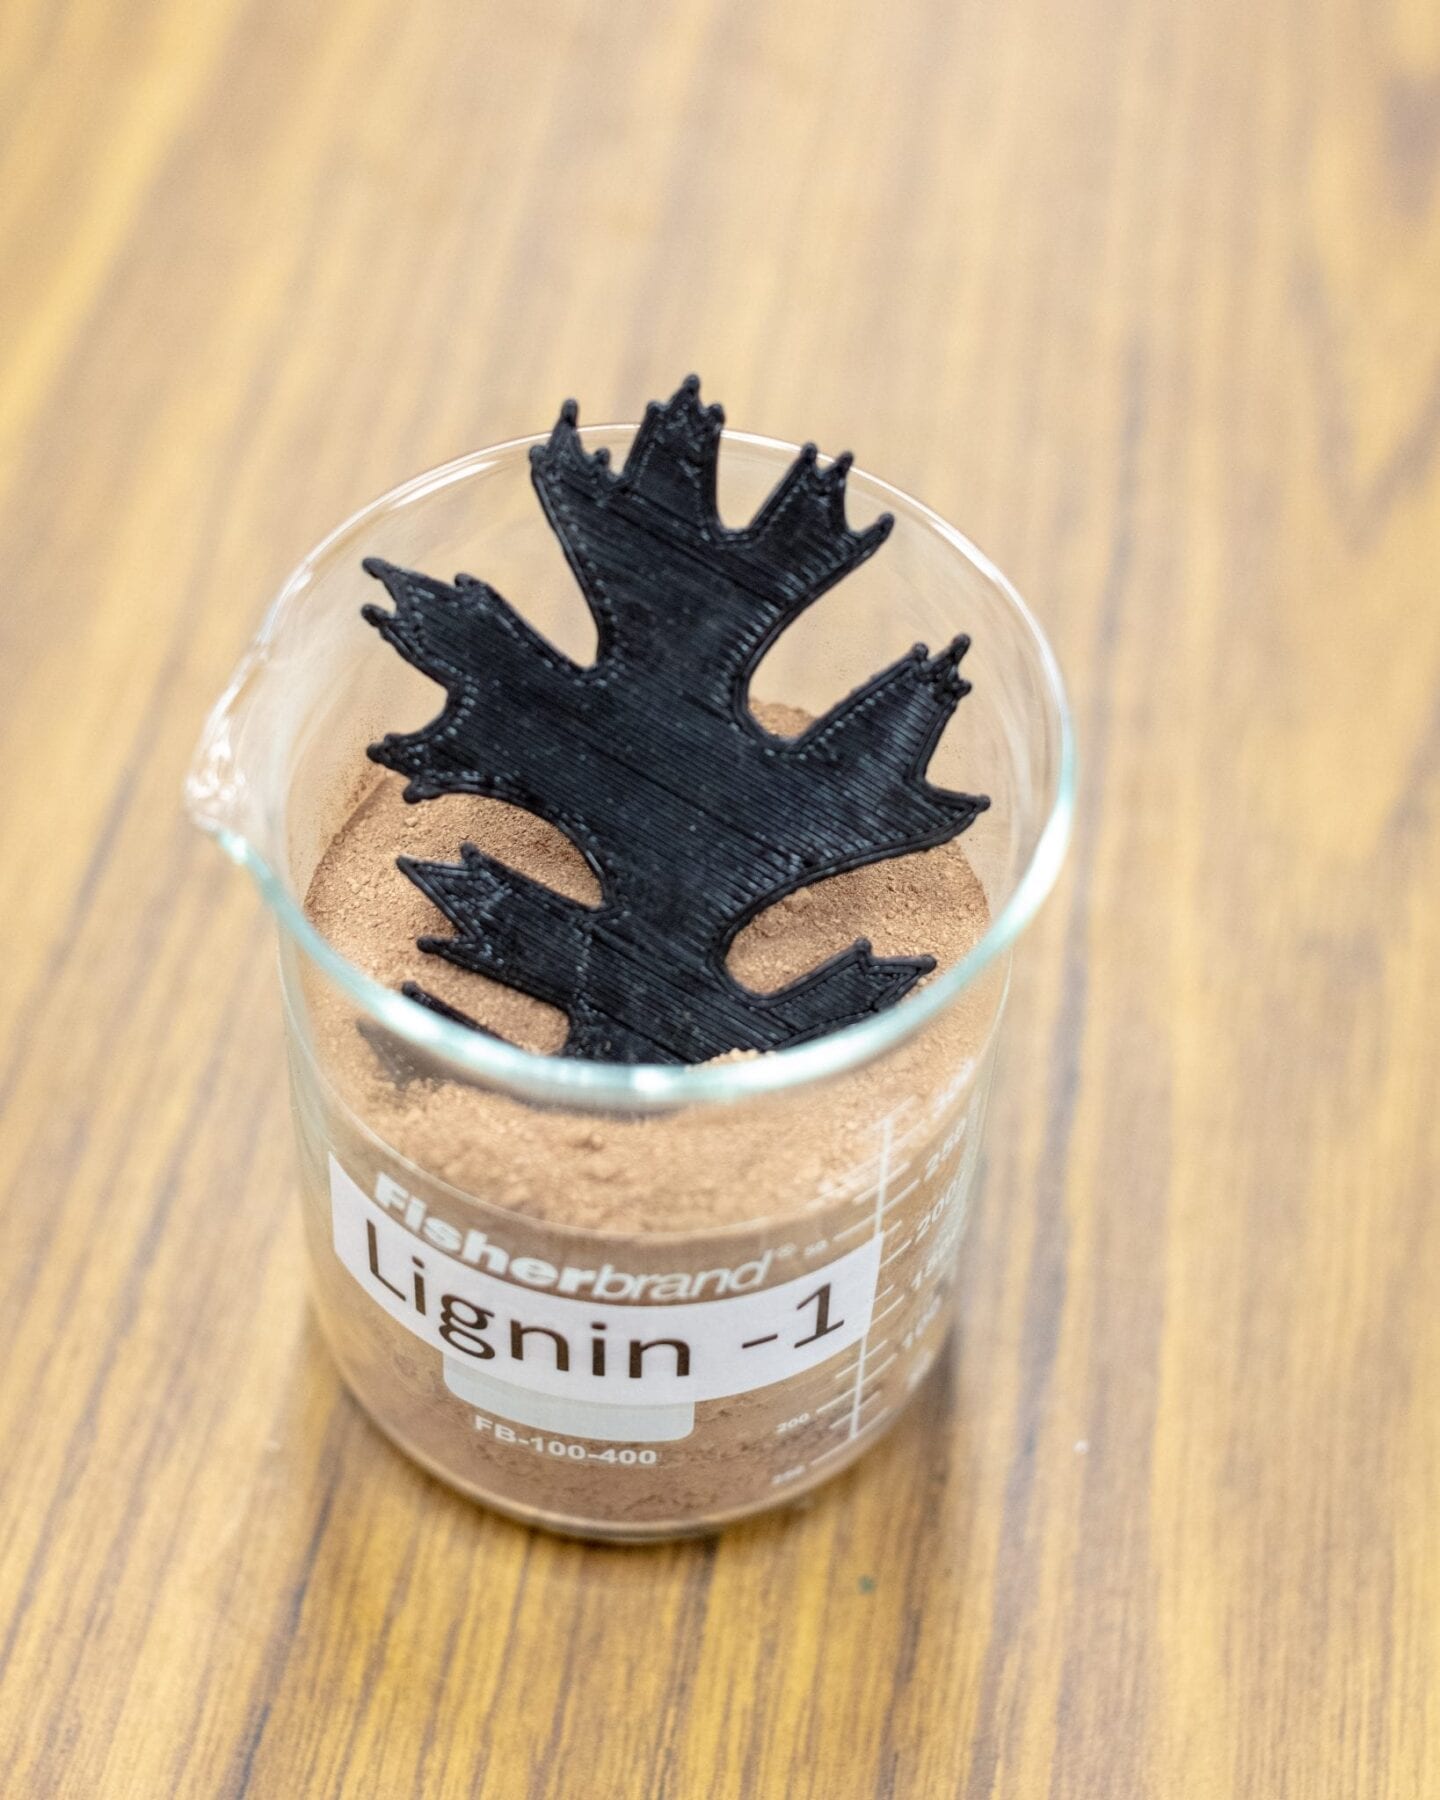 A new renewable 3D printing feedstock - lignin